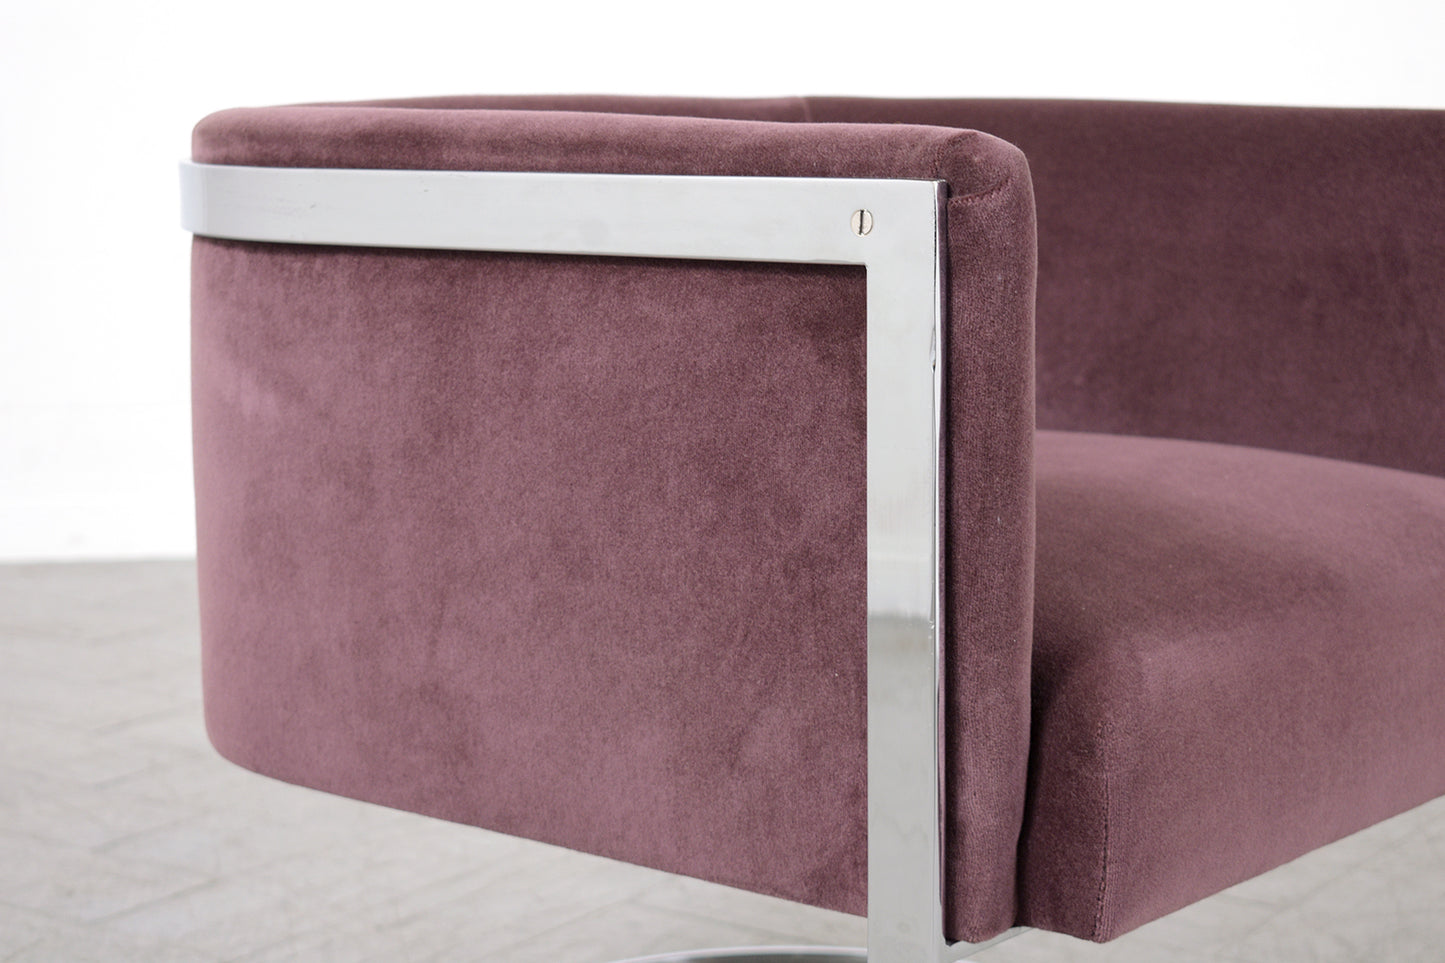 Restored 1970s Mid-Century Modern Lounge Chair